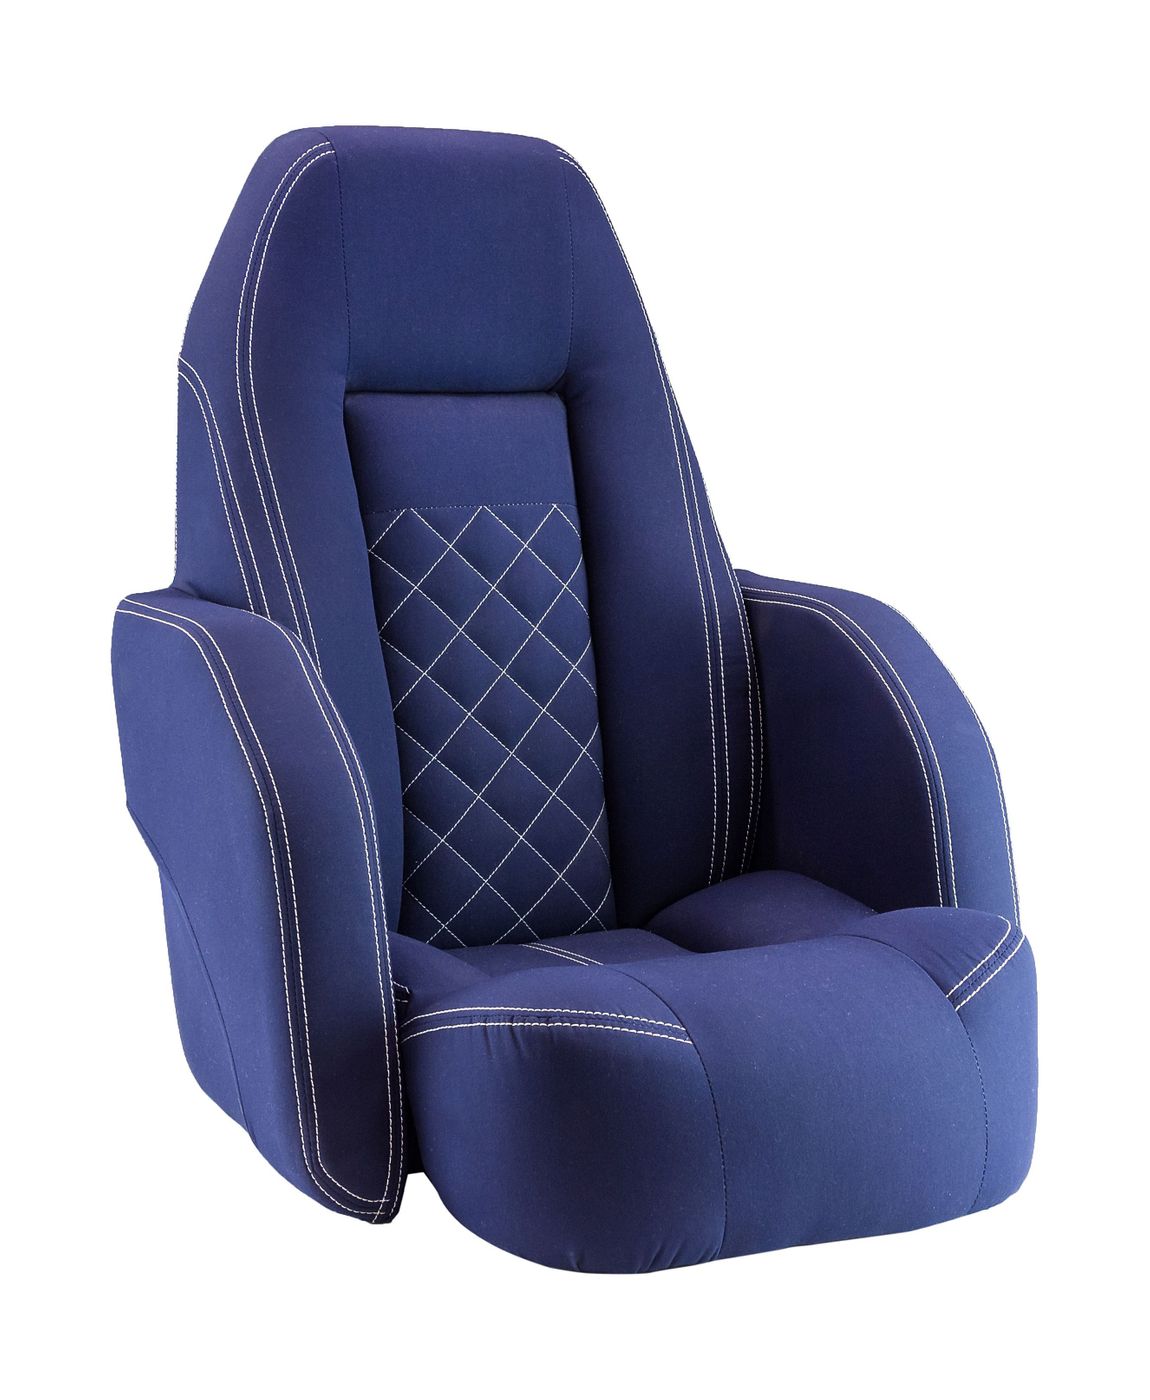 Кресло ROYALITA мягкое, подставка, обивка ткань Markilux темно-синяя 570000395 ткань интерио розы ширина 150 см